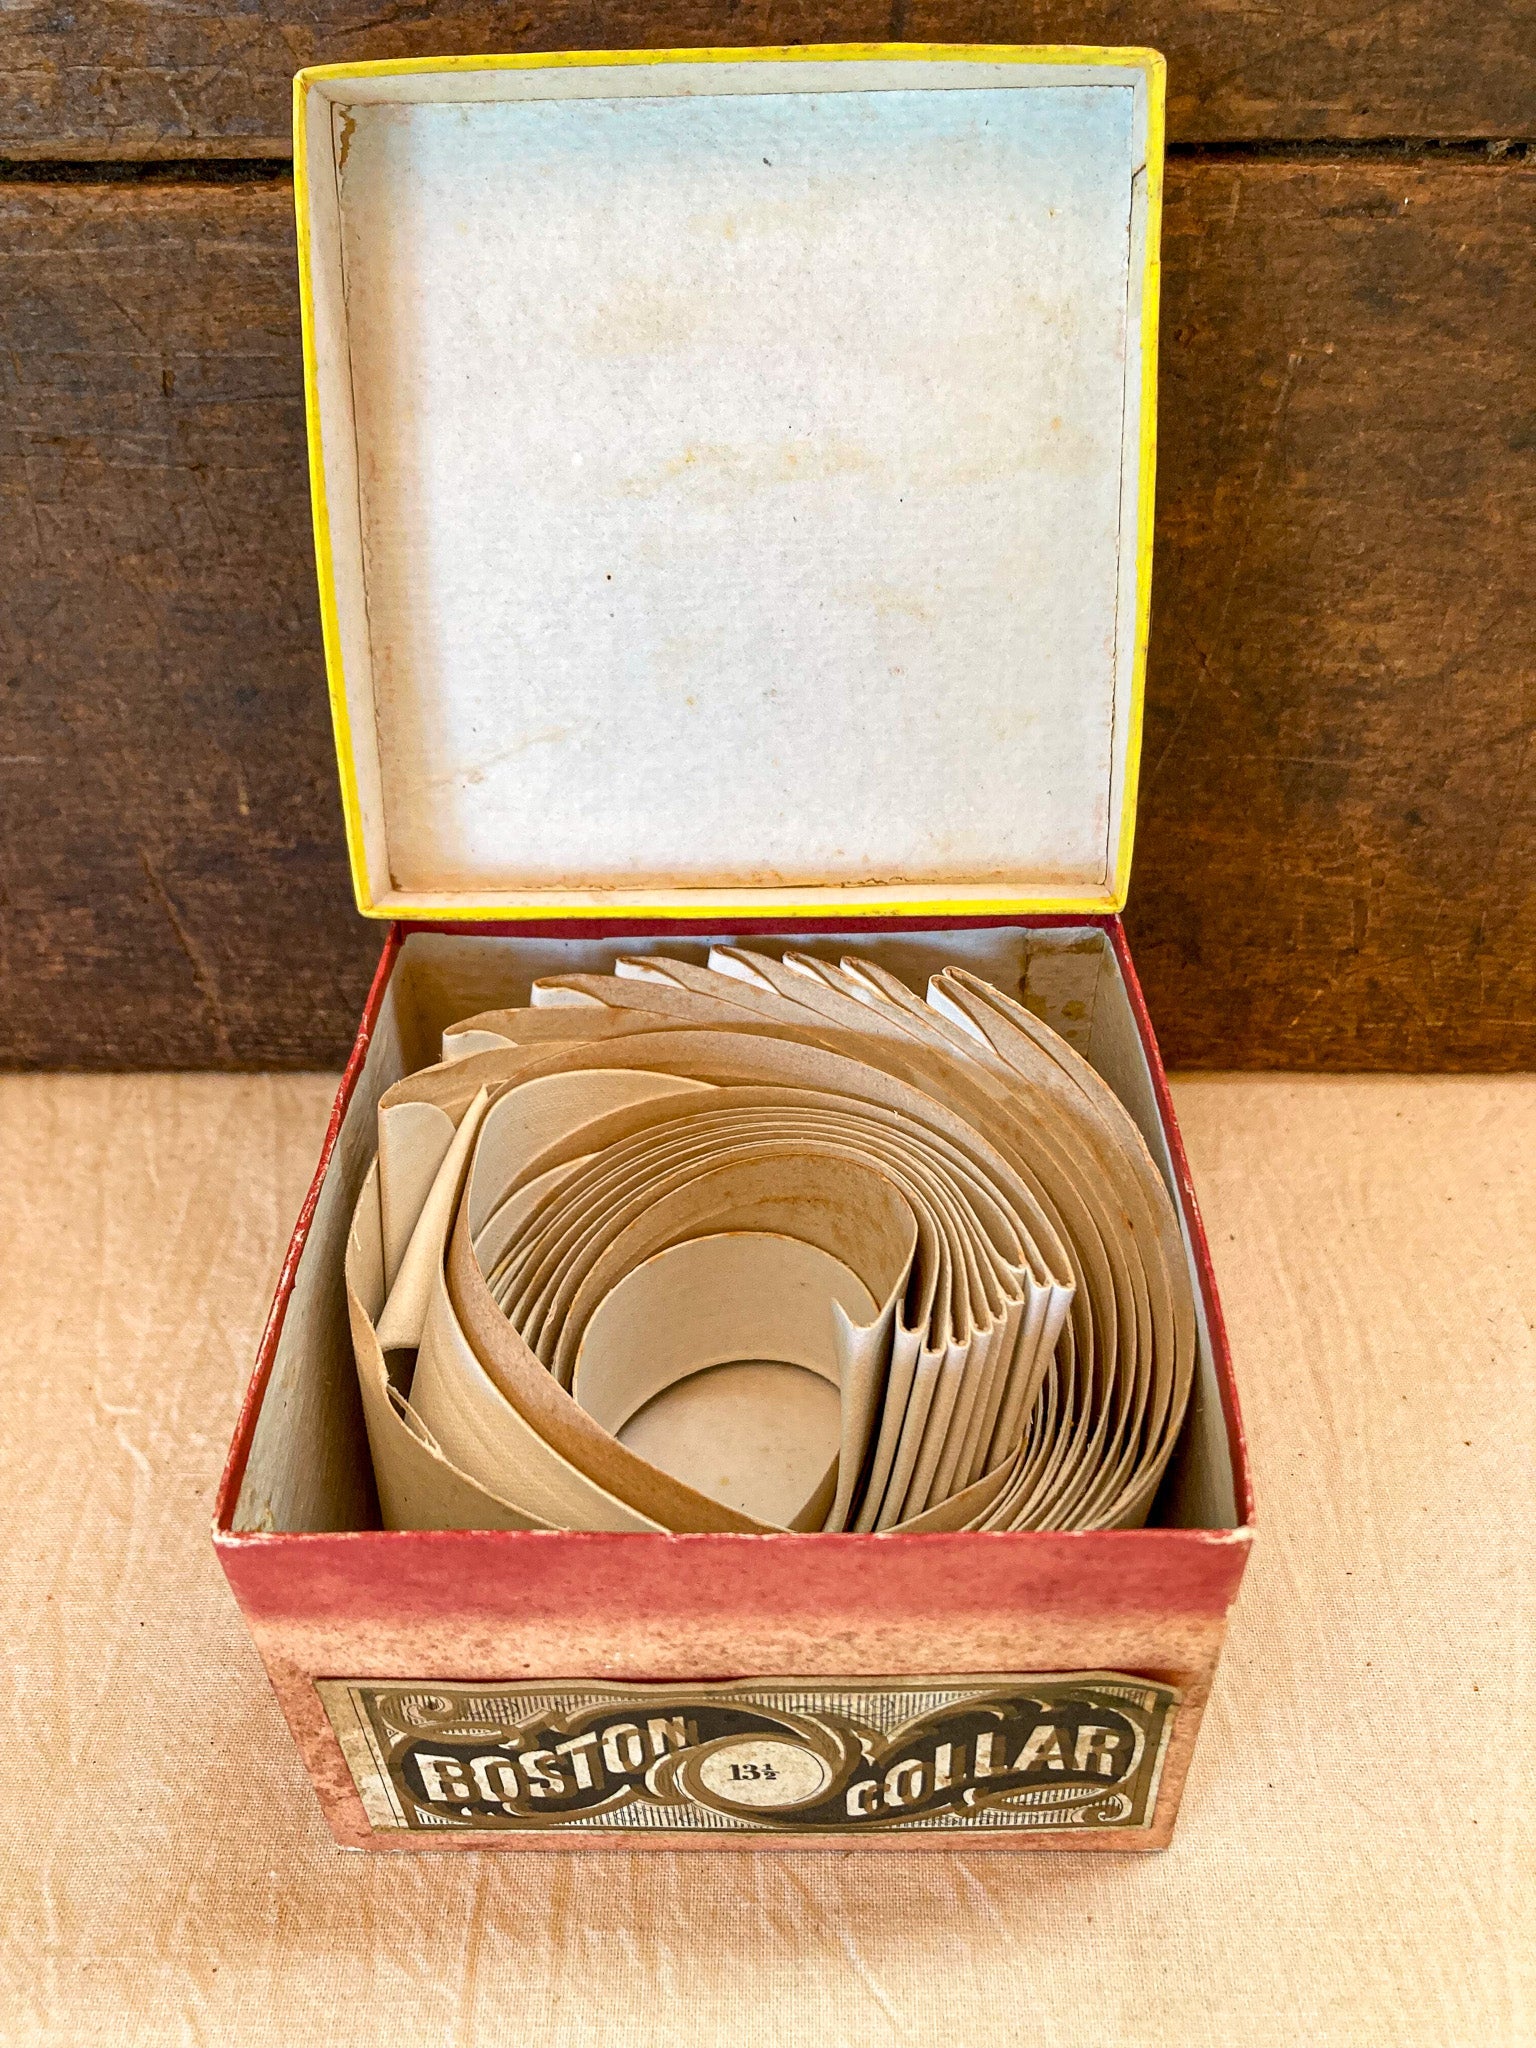 Victorian Era Paper Collars for Men, Boston Collar – New in Original Box